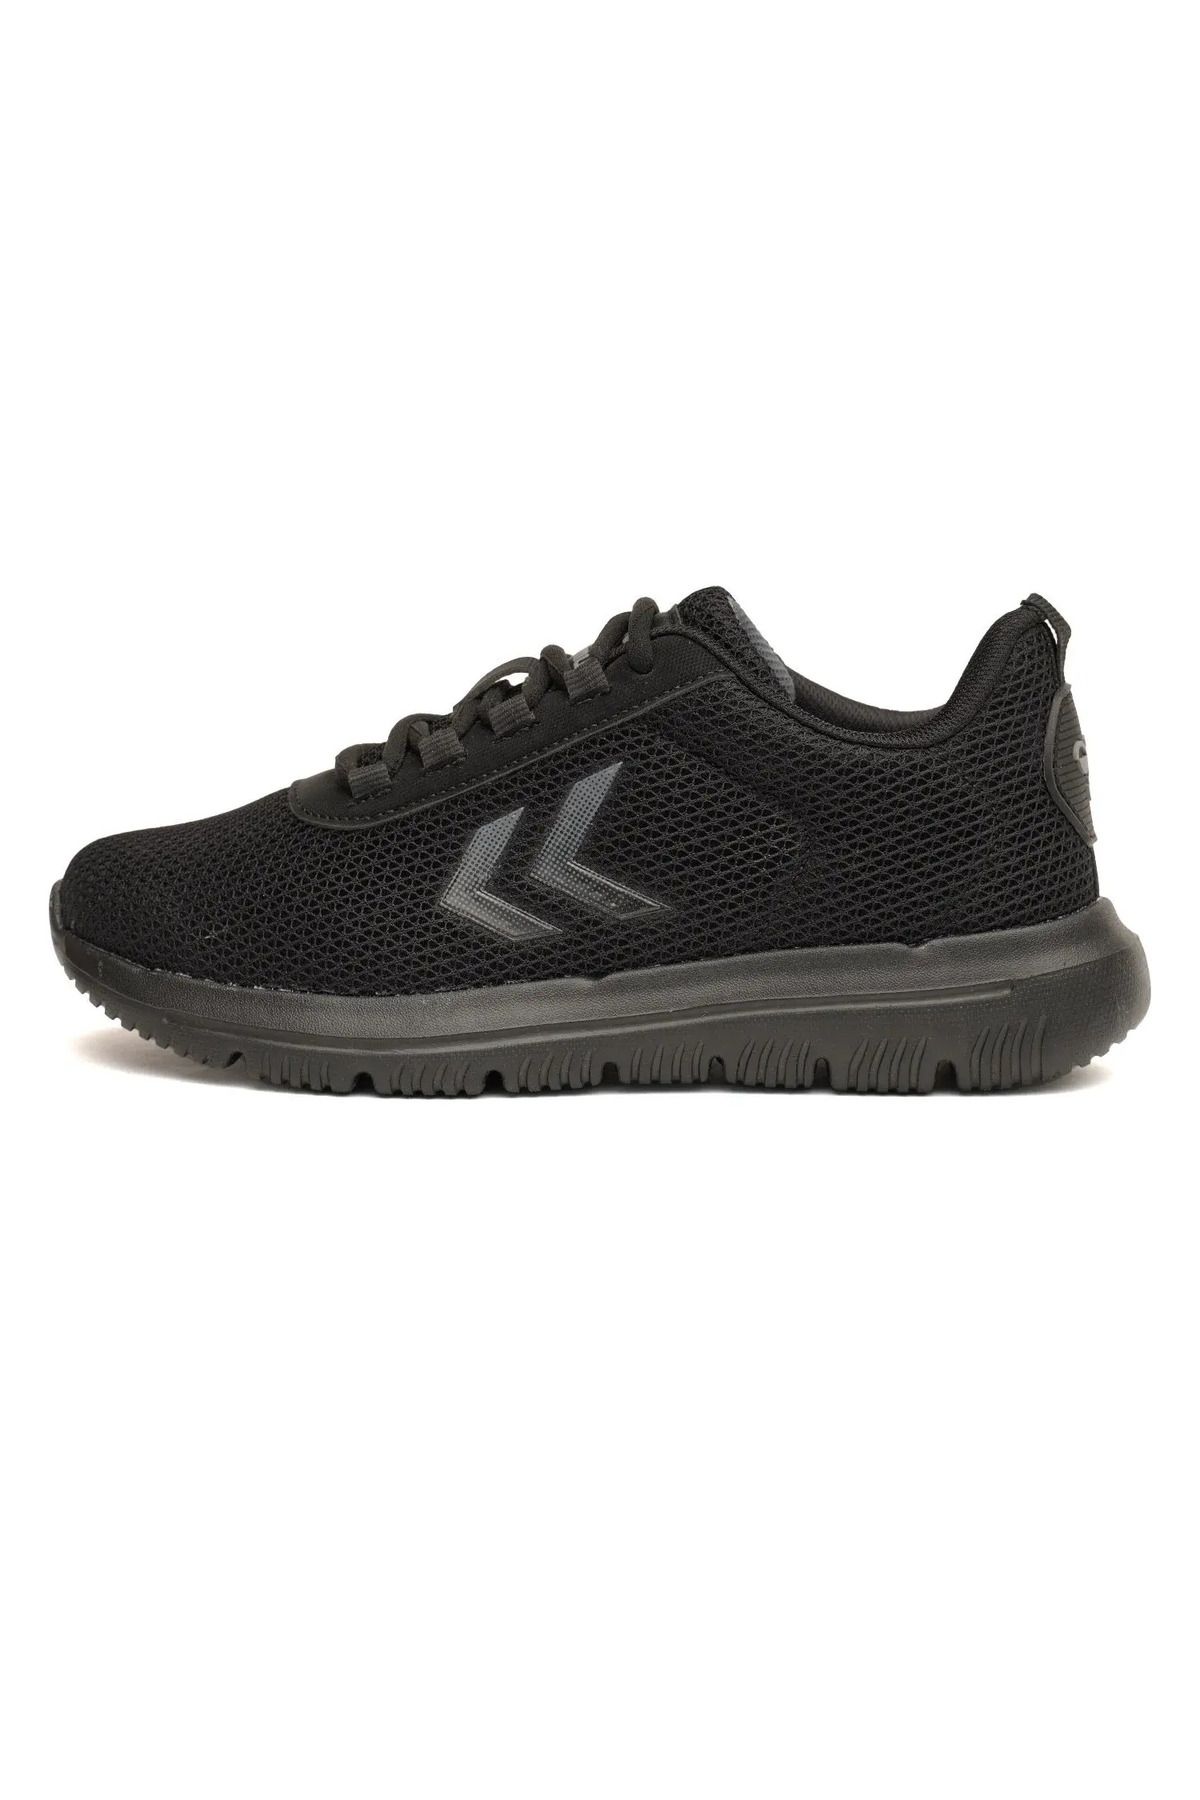 hummel Tyro Unisex Sneaker Ayakkabı 900491-2042black